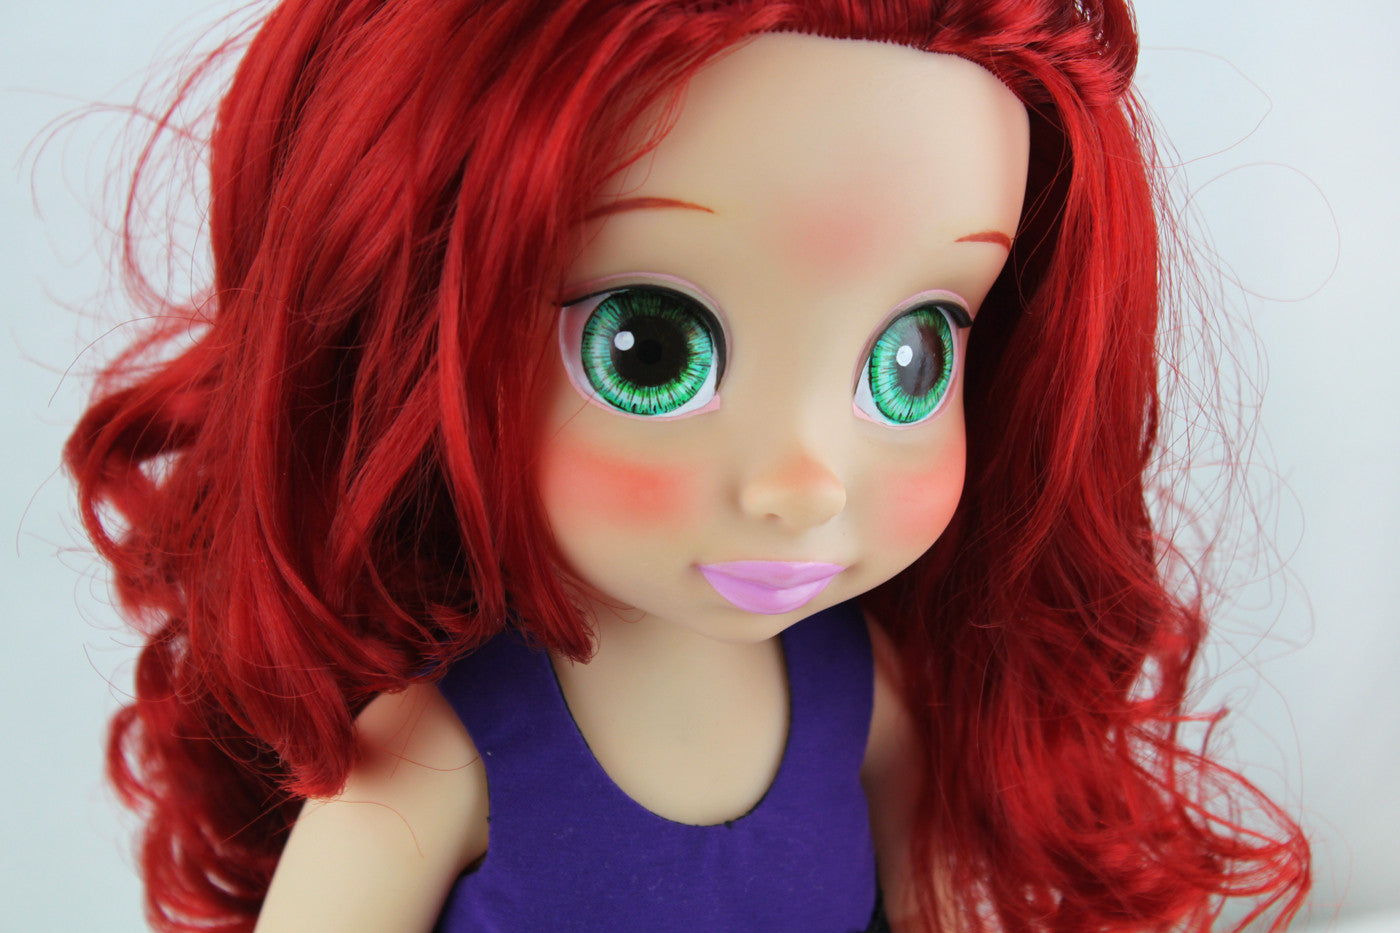 Disney Animator doll restoration & customisation part 1 - Hair